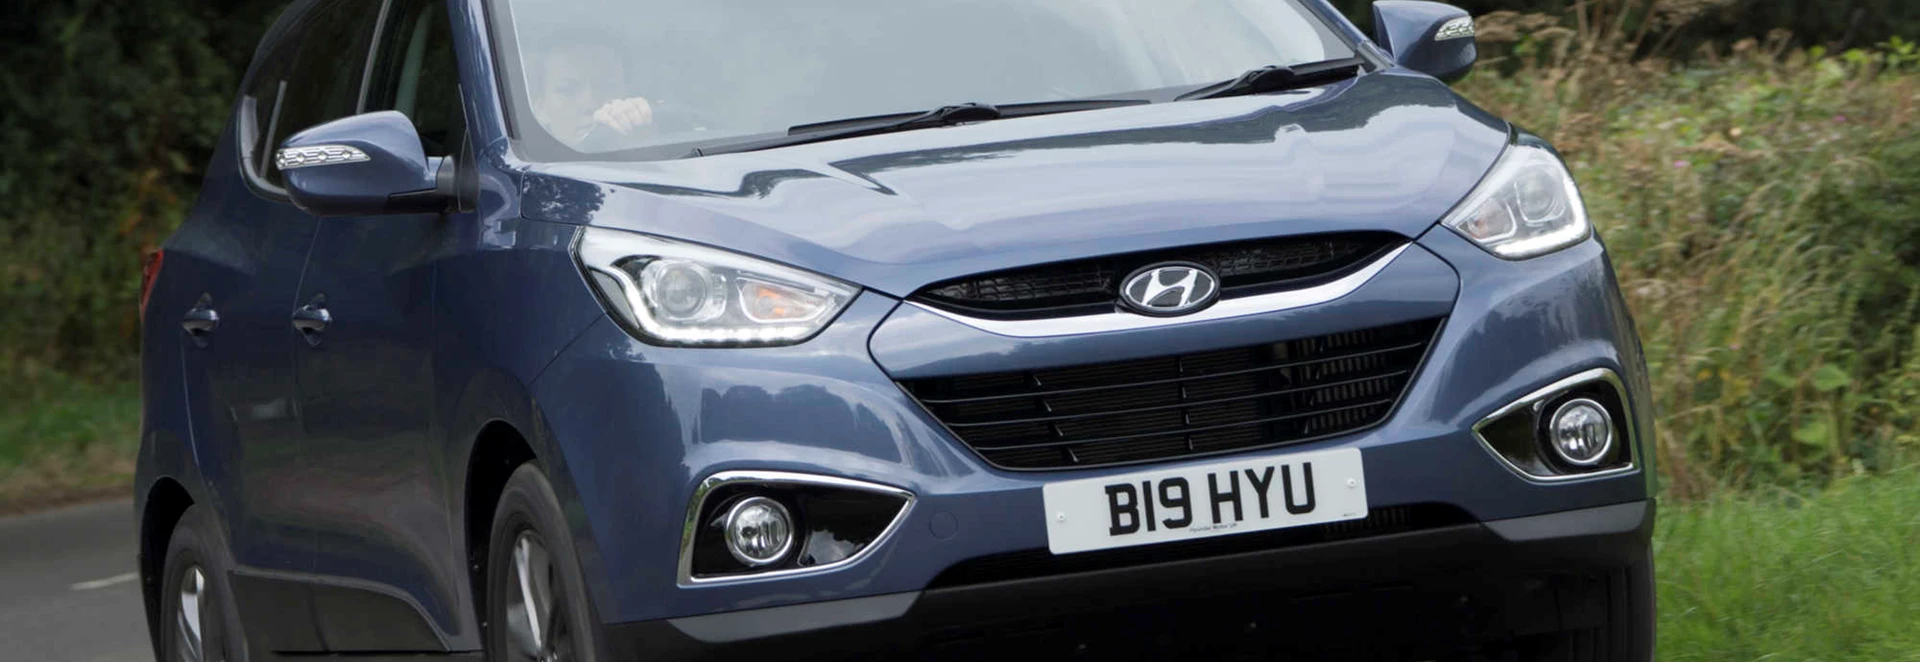 Hyundai ix35 crossover review - Car Keys